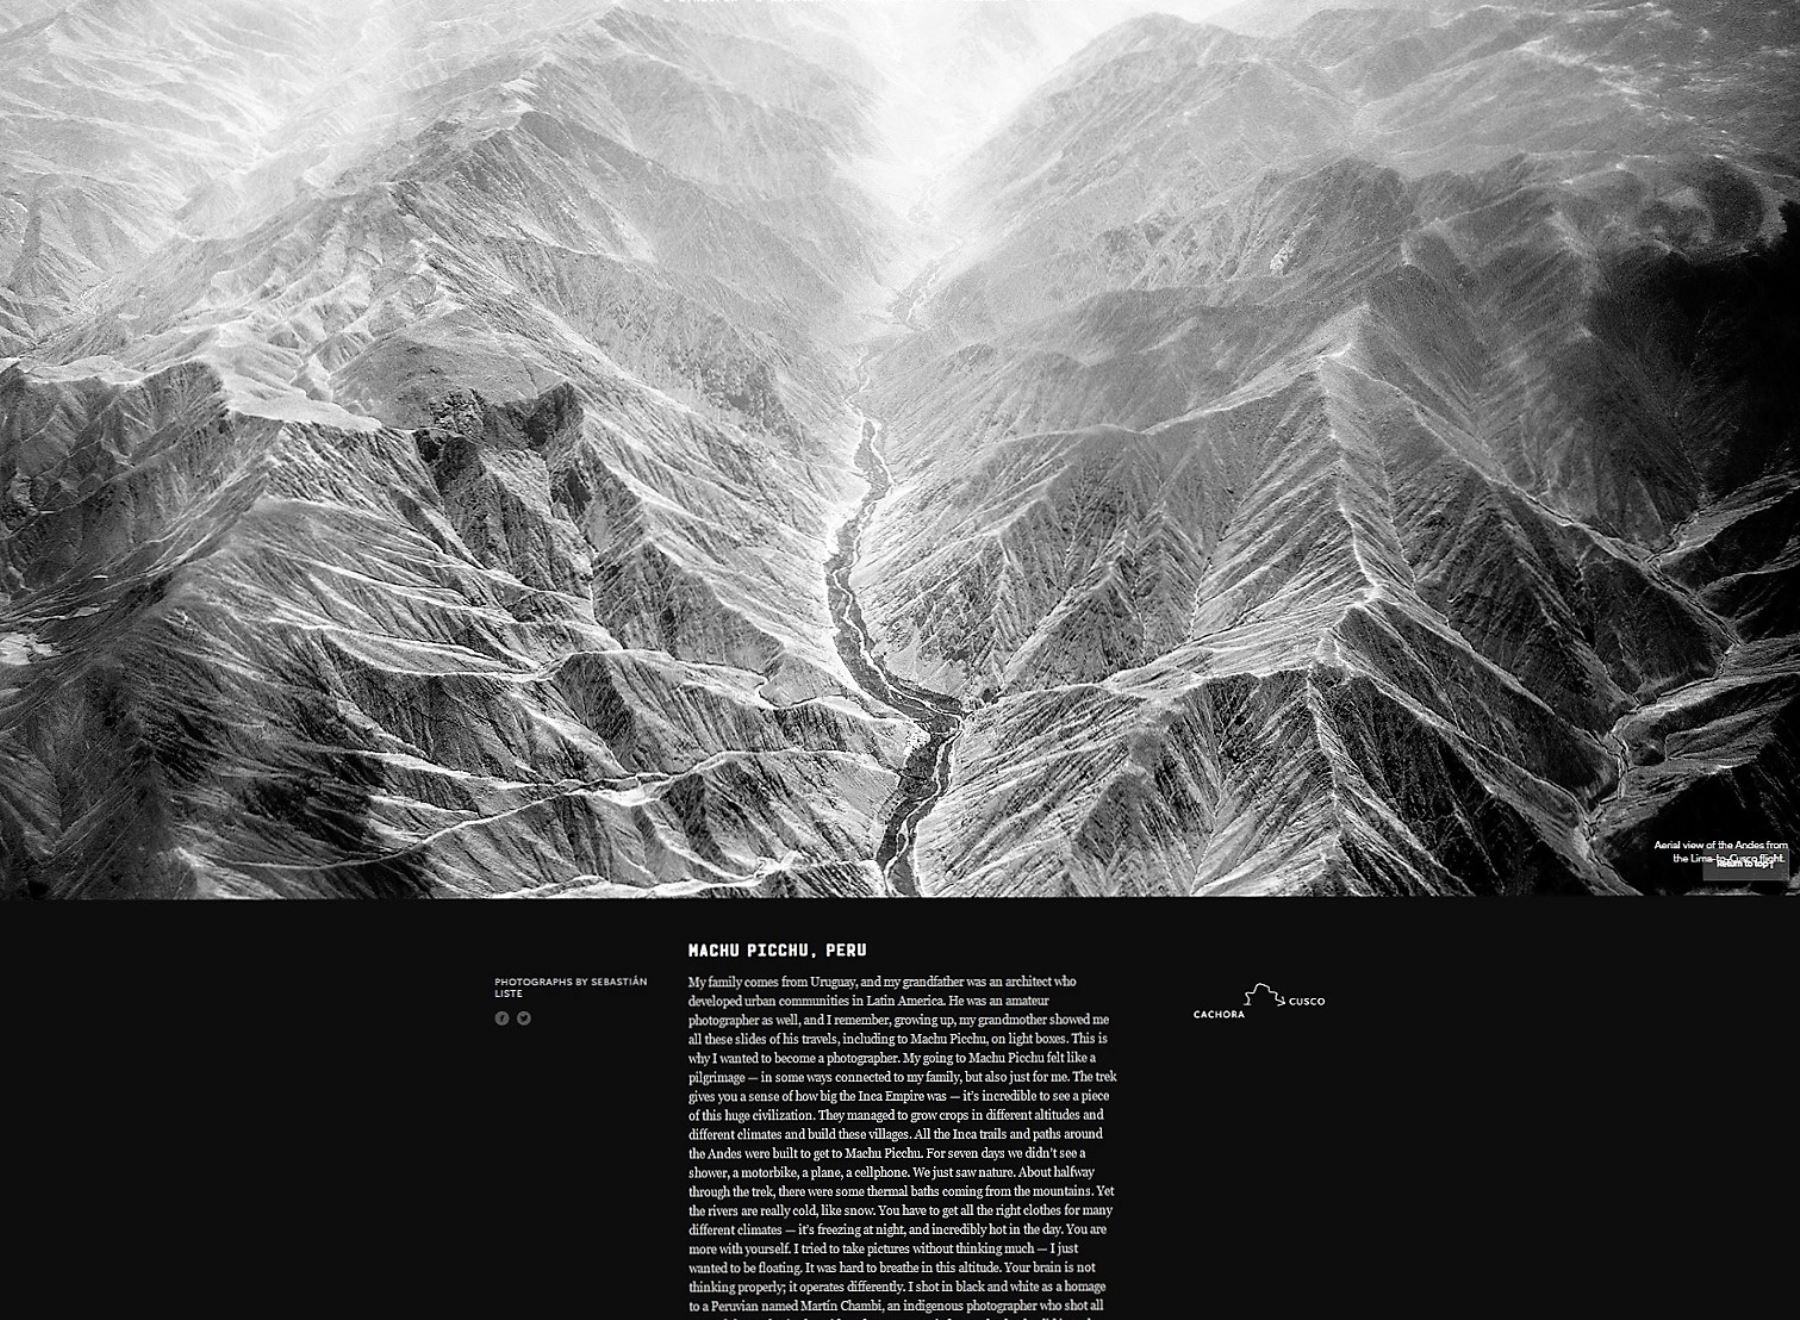 Promperú resalta reportaje gráfico sobre Machu Picchu y Choquequirao publicado por The New York Times.